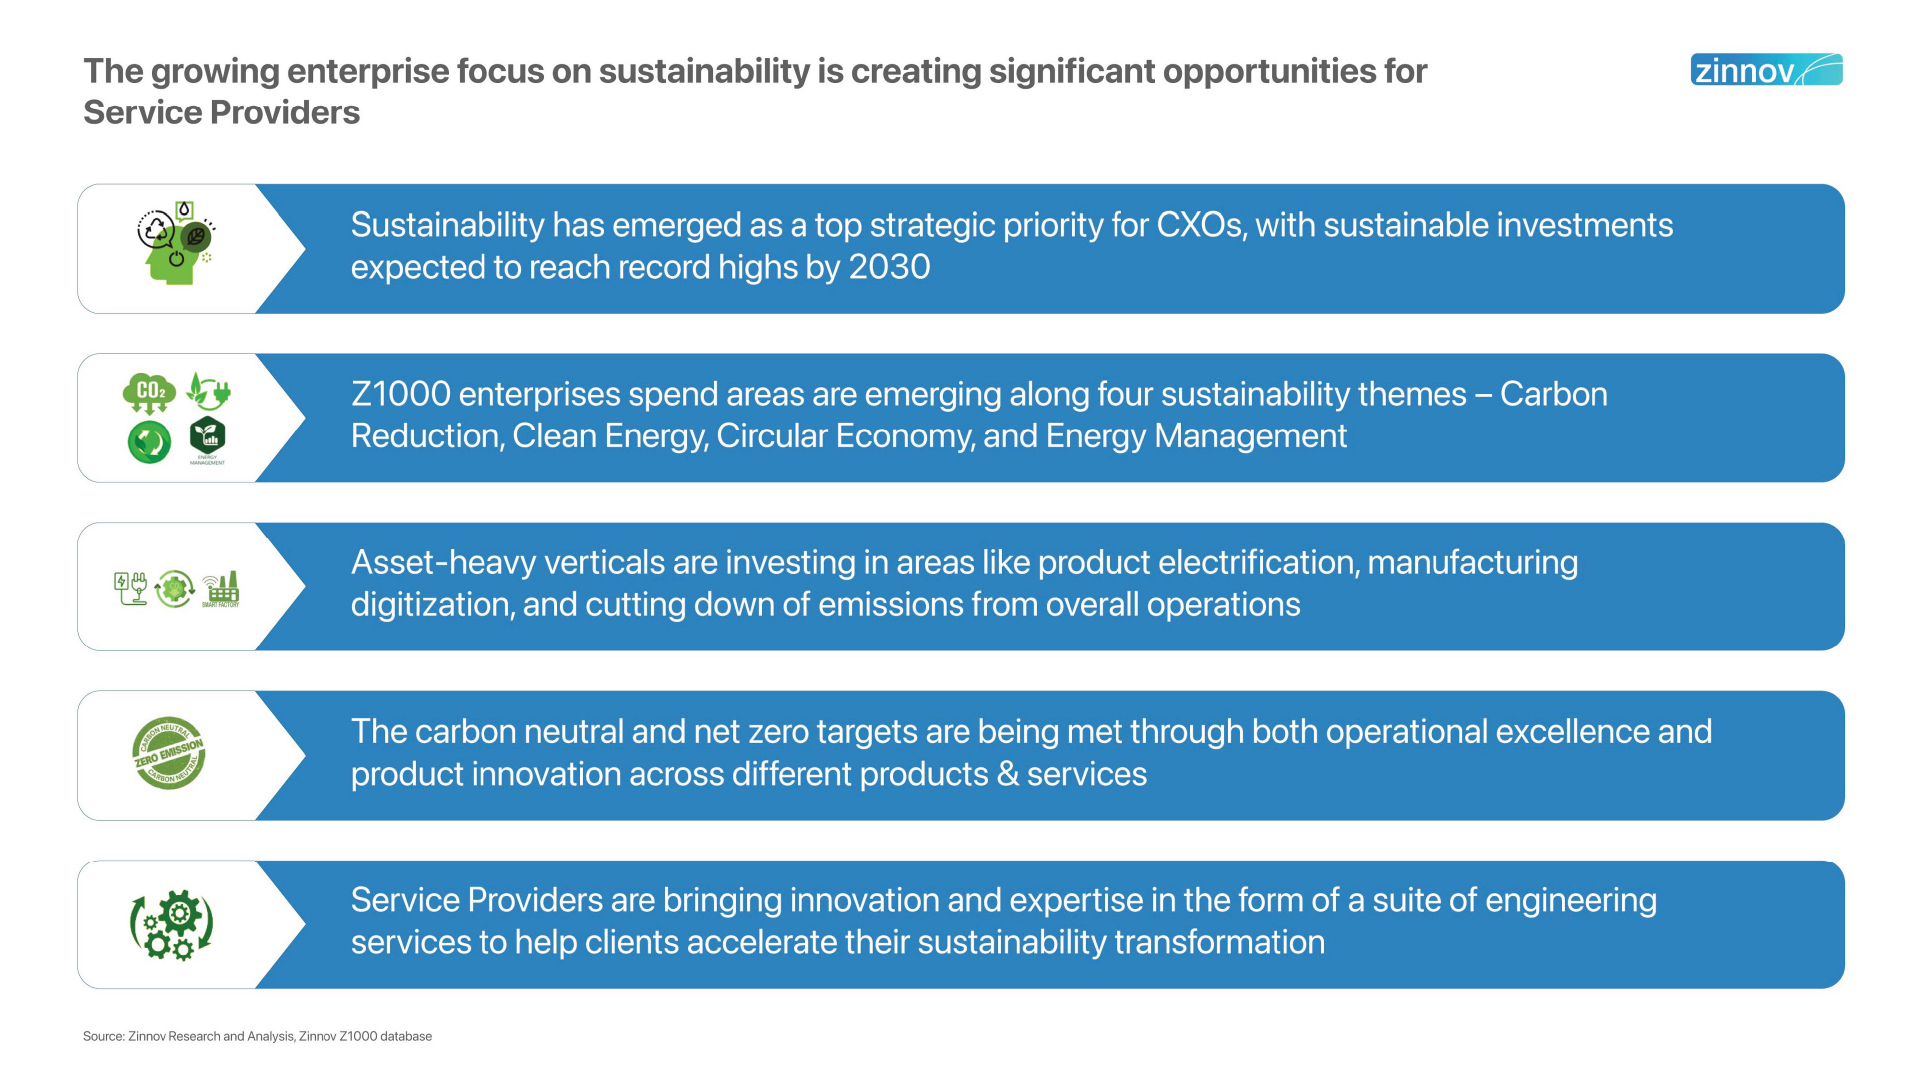 Enterprise focus on Sustainability